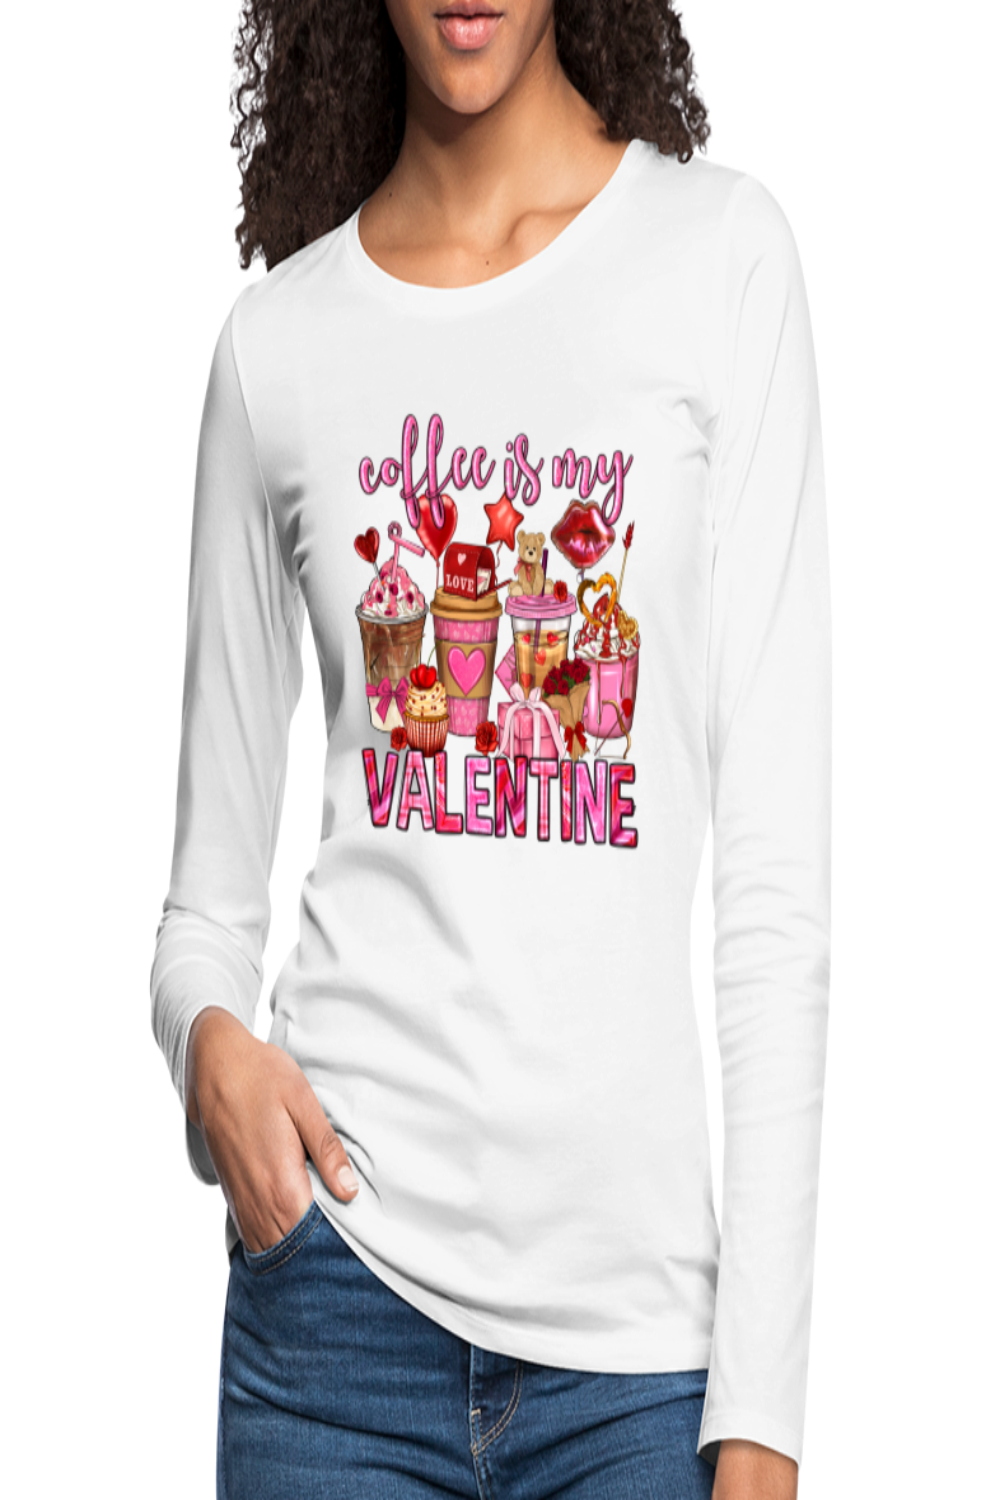 Women's Valentine's Day Coffee is my Valentine Long Sleeve T-Shirt - white - NicholesGifts.online